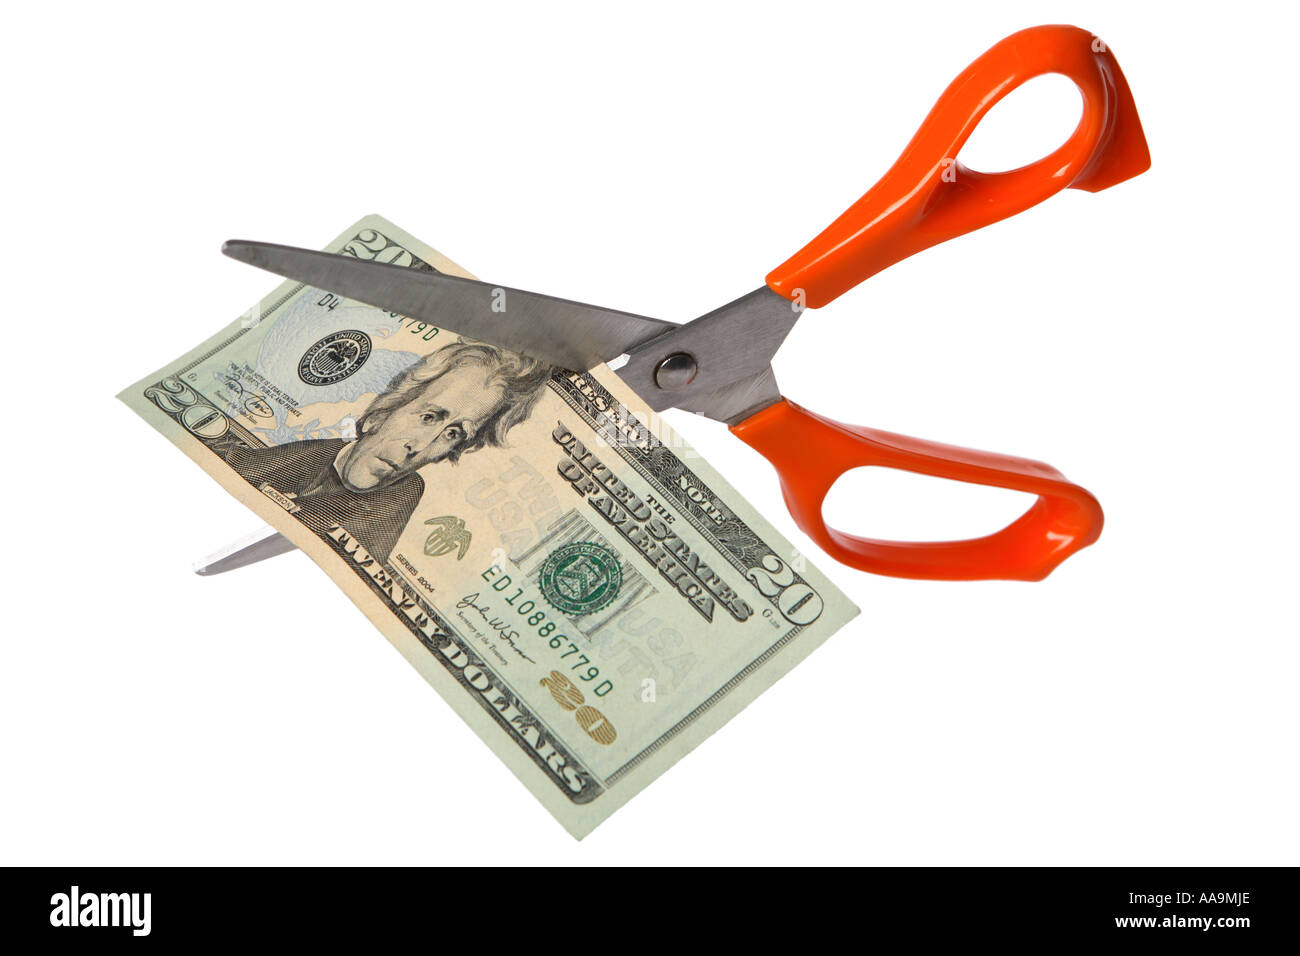 Scissors cutting US twenty dollar bill Stock Photo